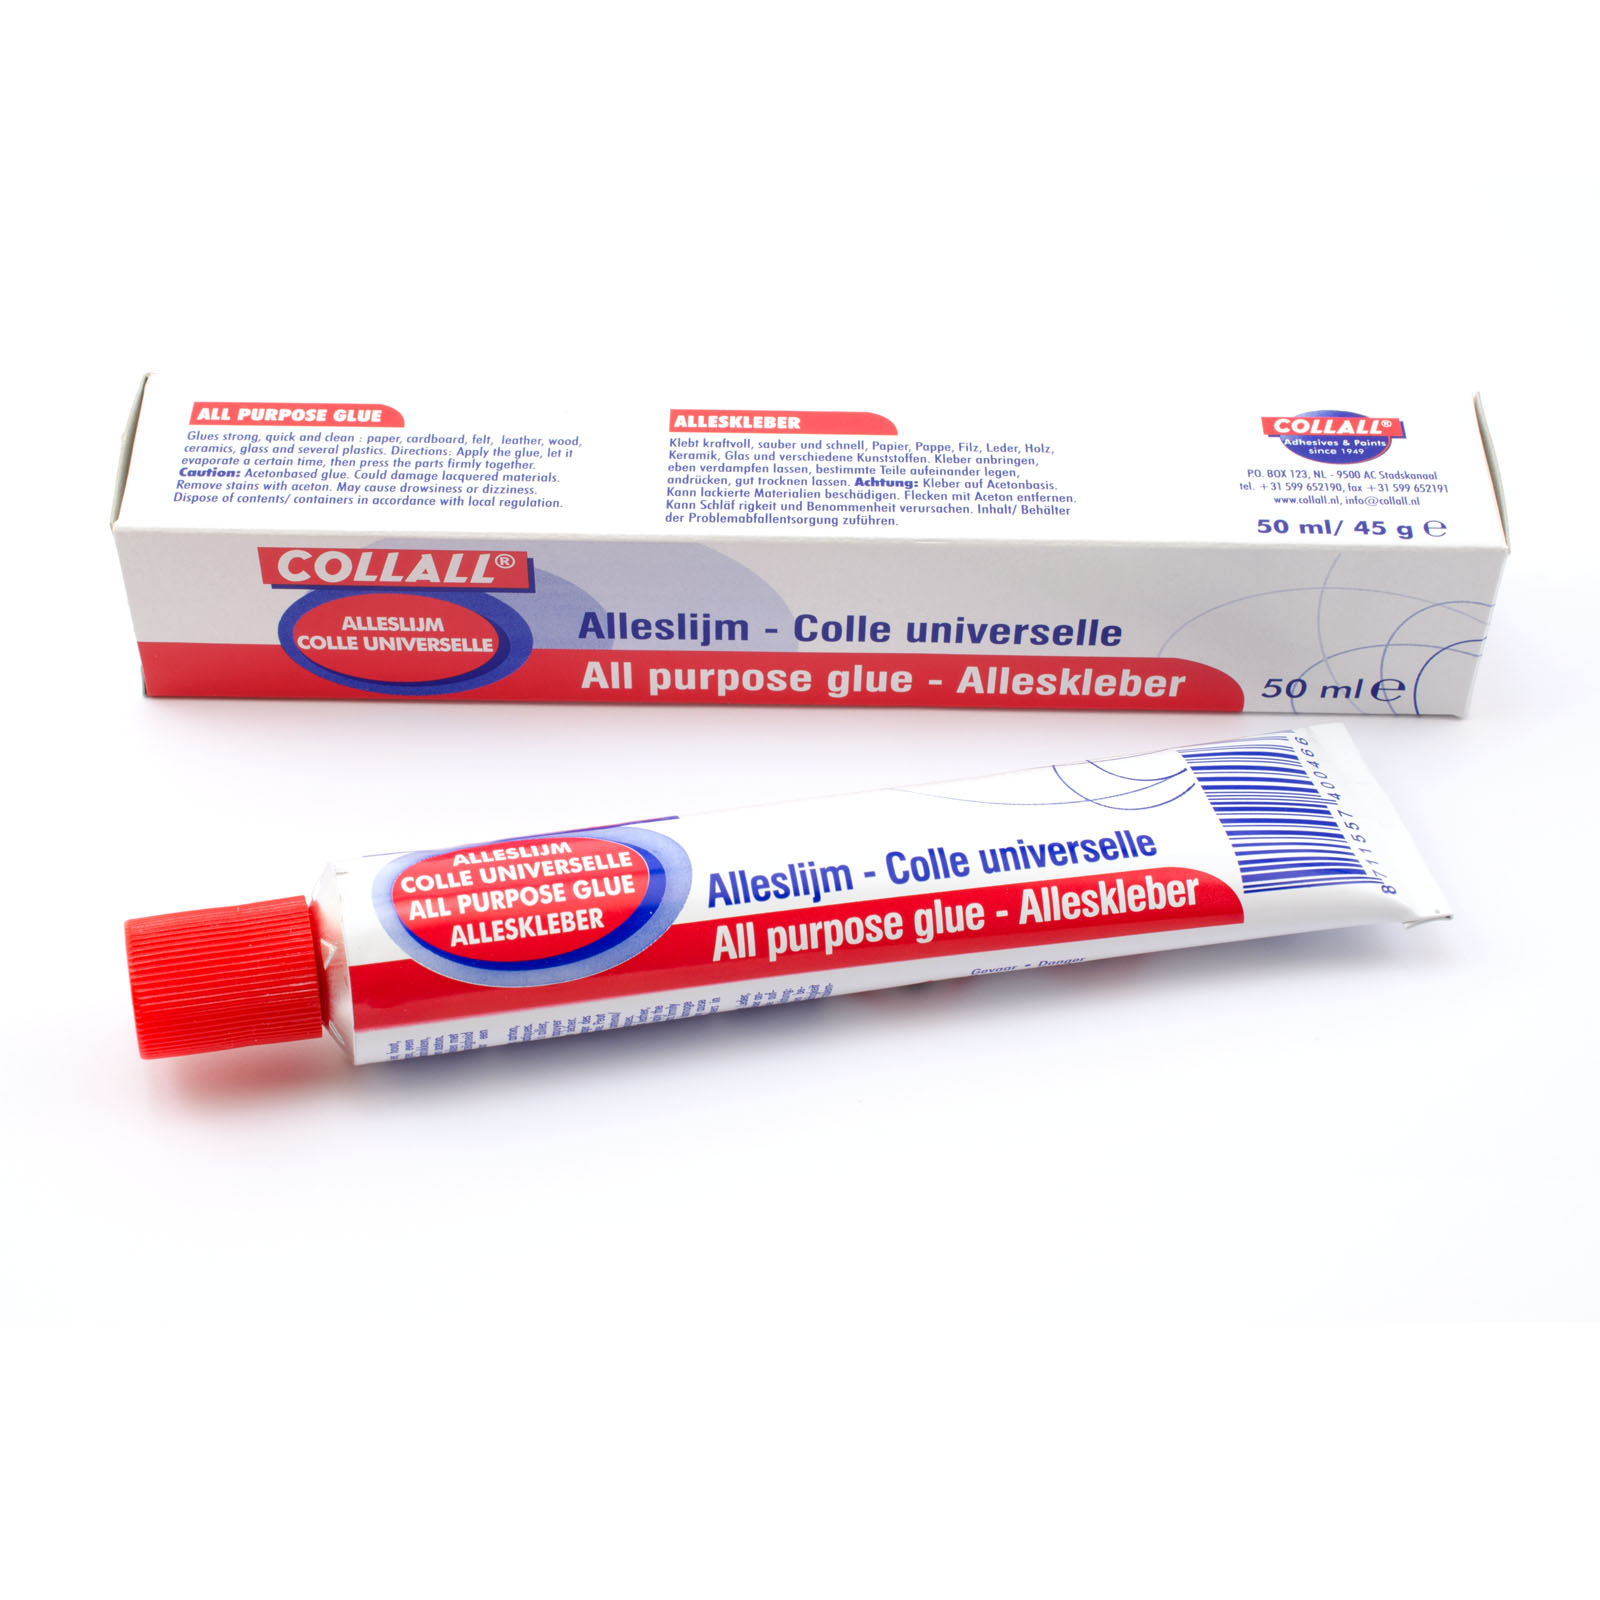 Collall • All purpose glue tube 50ml